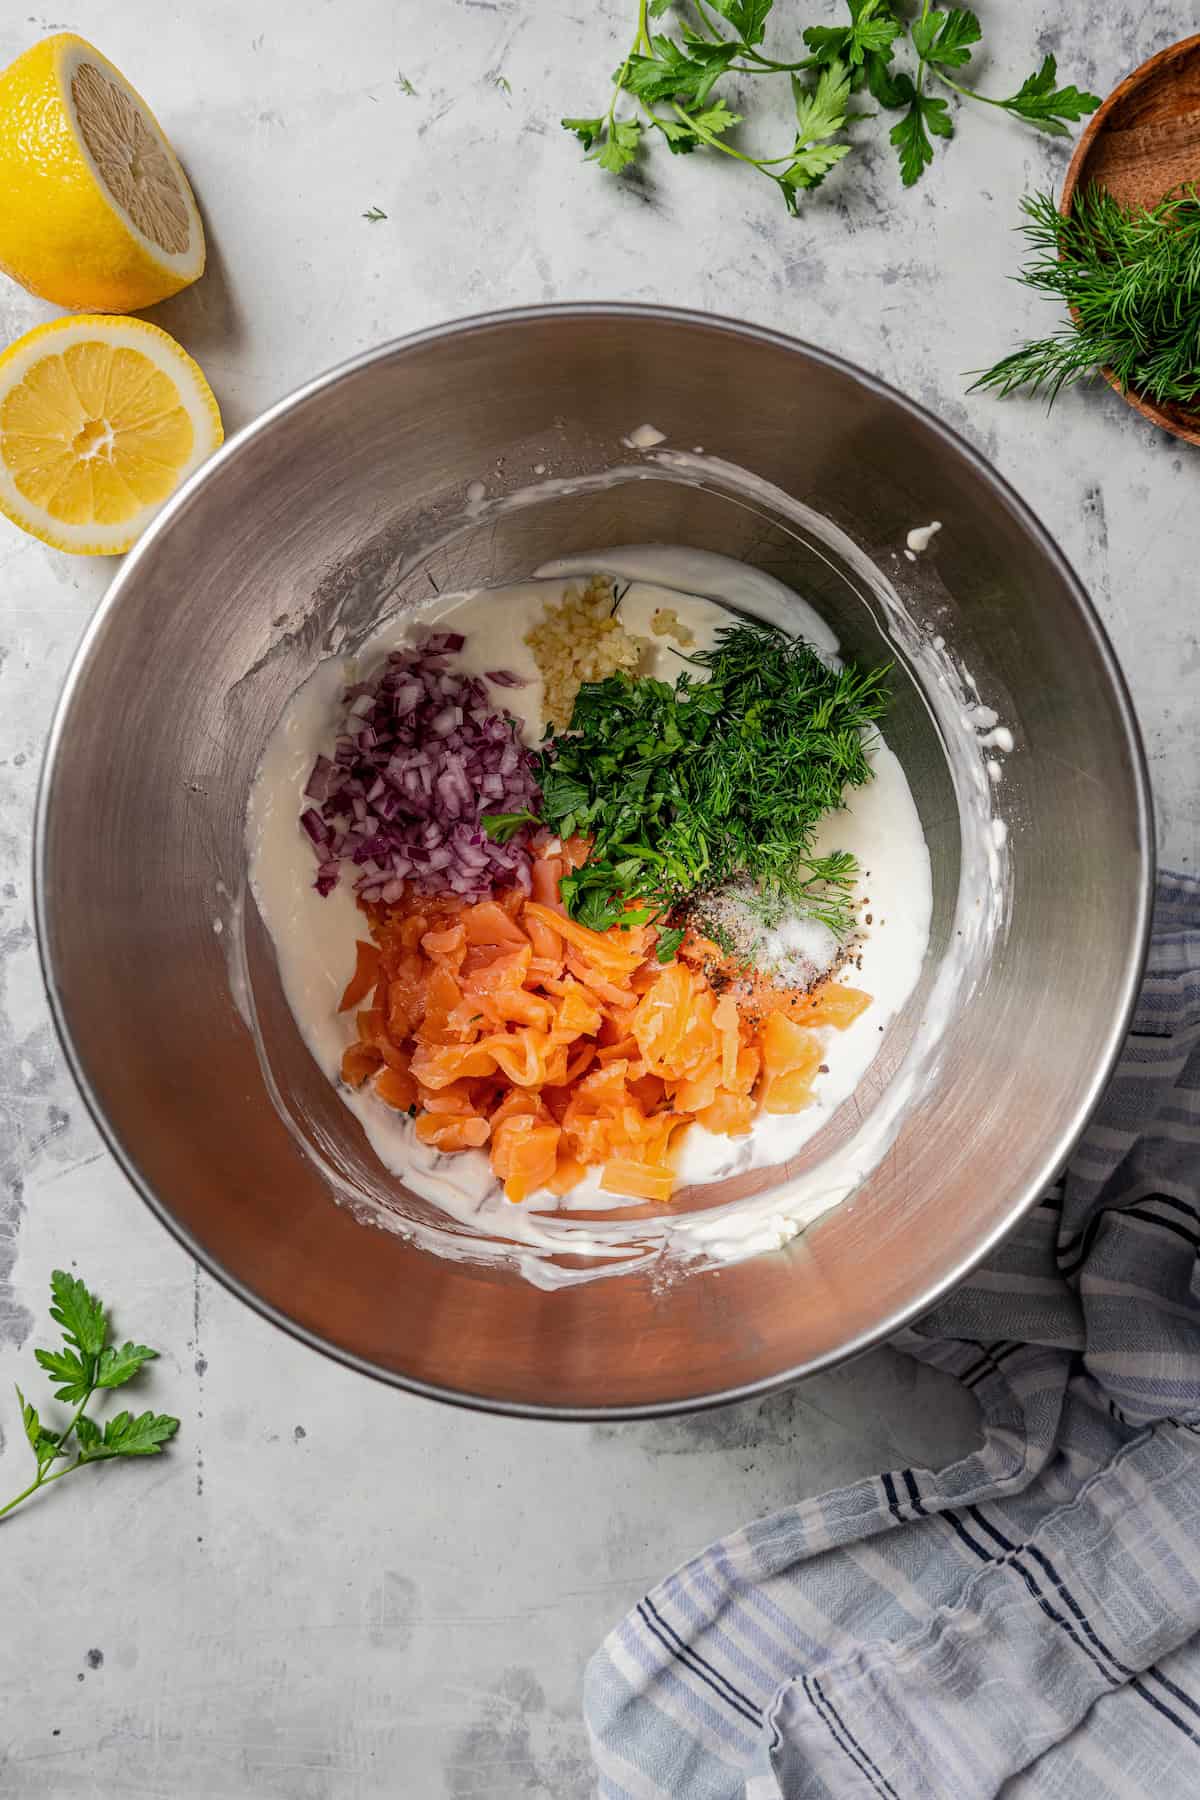 Salmon lox, herbs, and seasonings added to cream cheese dip ingredients in a metal mixing bowl.